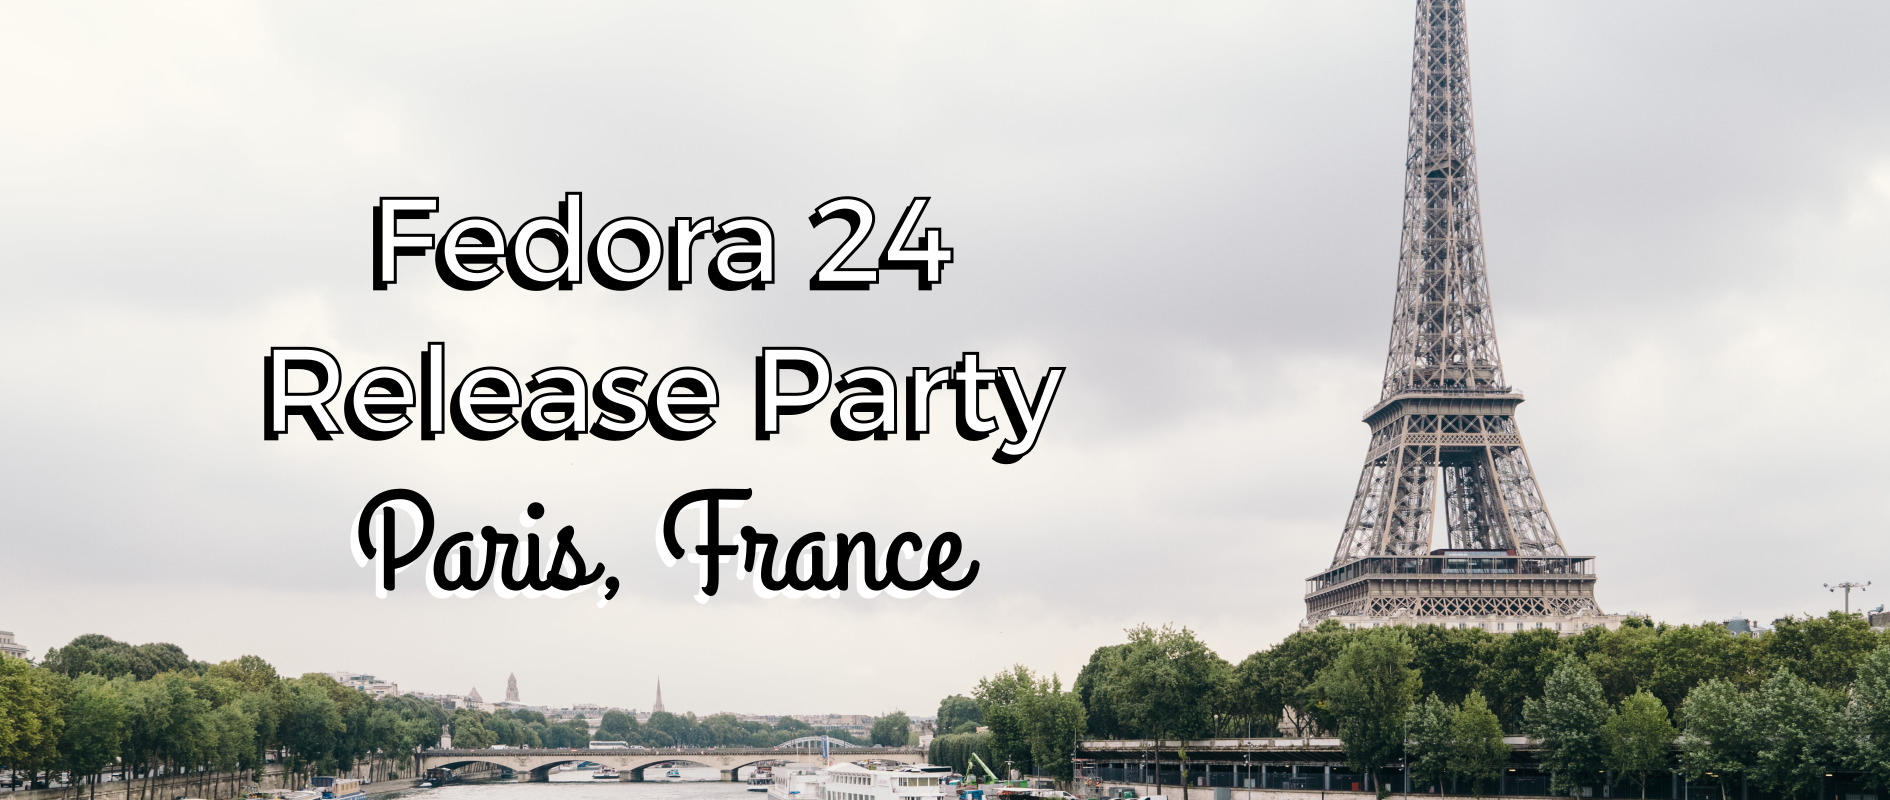 Fedora 24 release party in Paris